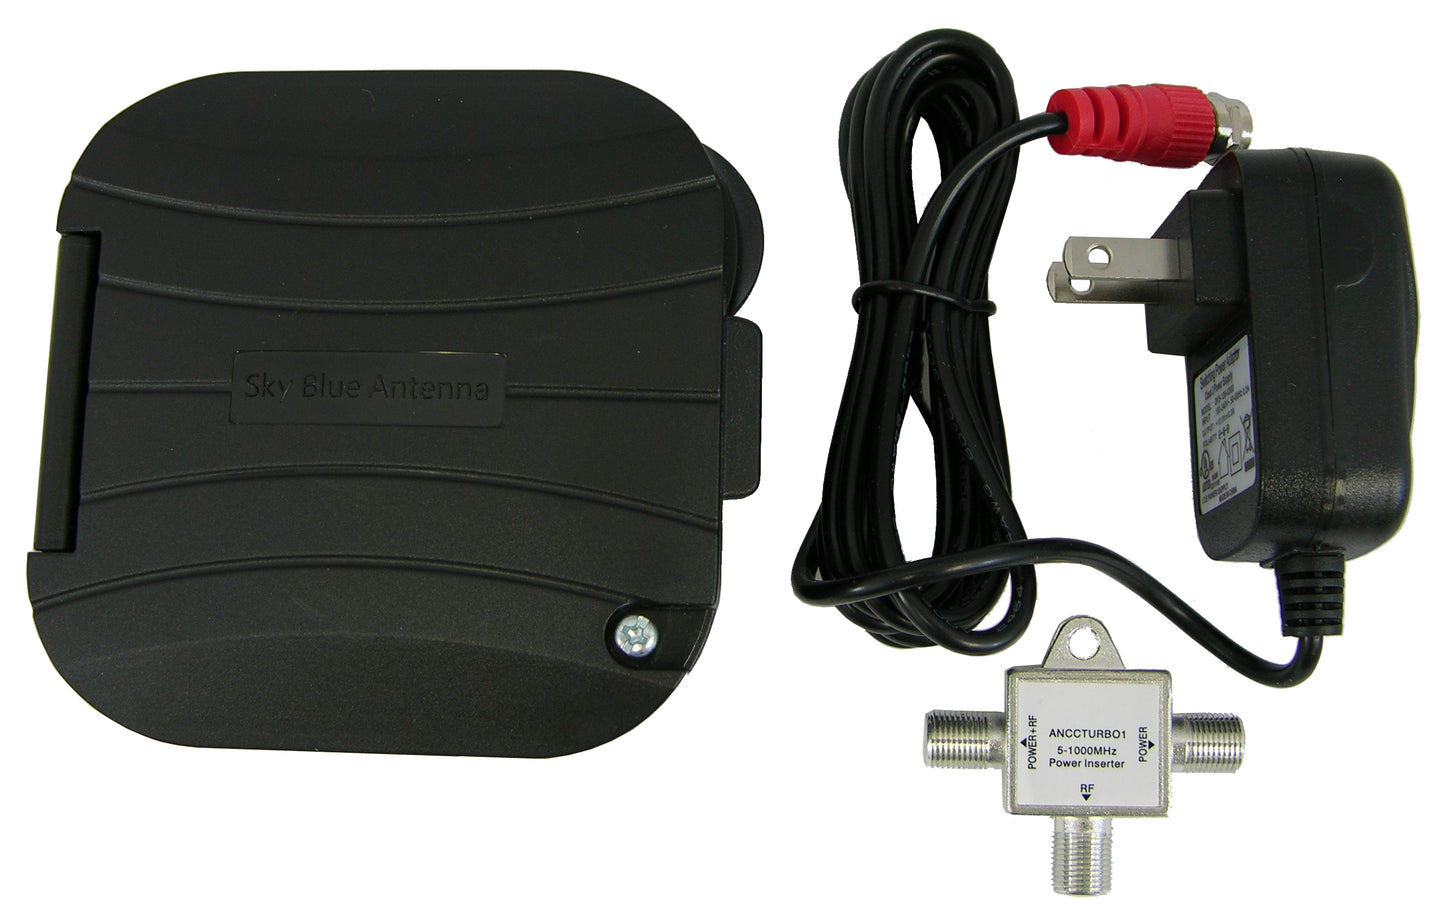 Sky Blue Antenna SB51, Single Input Preamp Amplifier, 30 dB Variable Gain